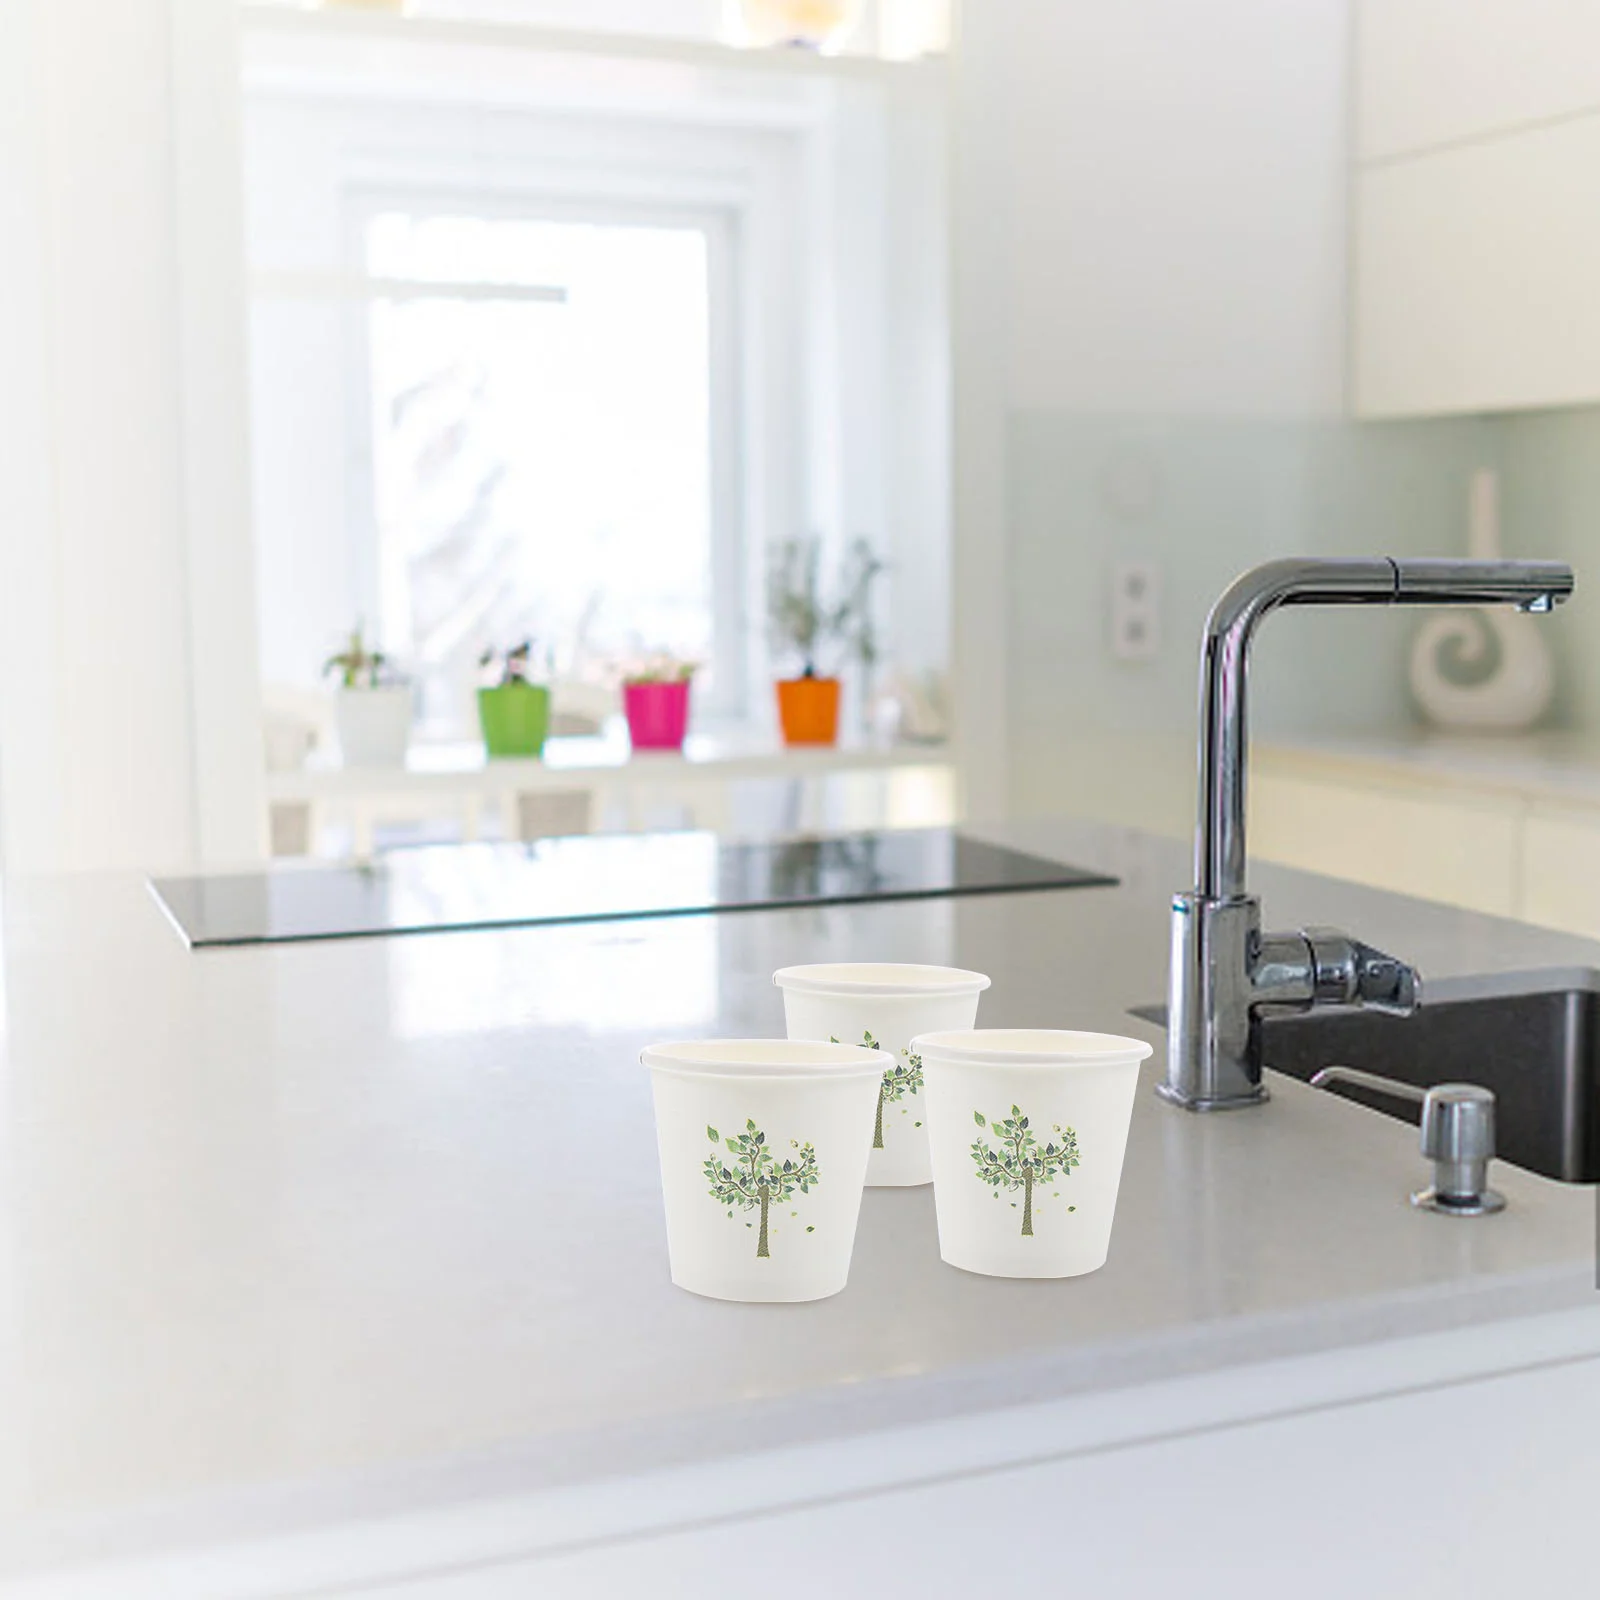 

500 Pcs Tasting Cup Small Cups Disposable 3 Oz Paper Bathroom Wedding Decor 3oz Juice Glass